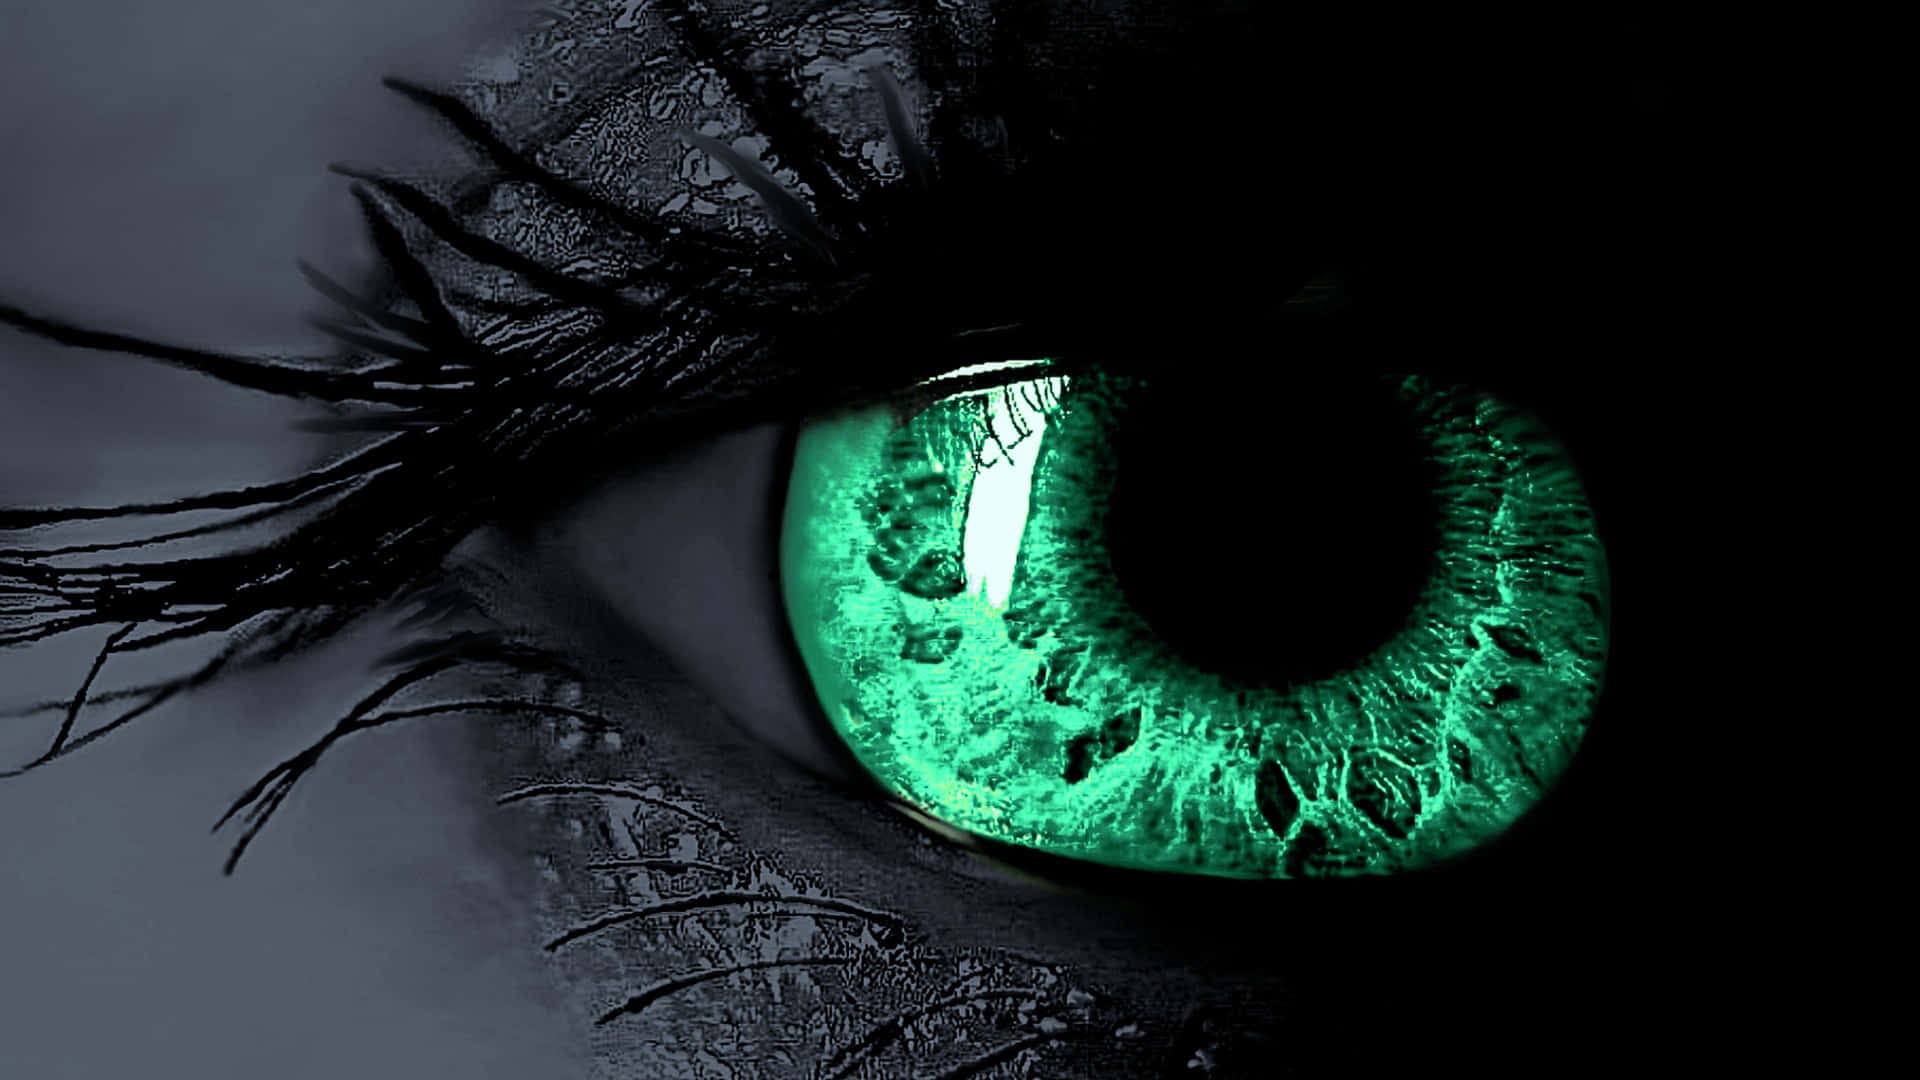 glowing green eyes